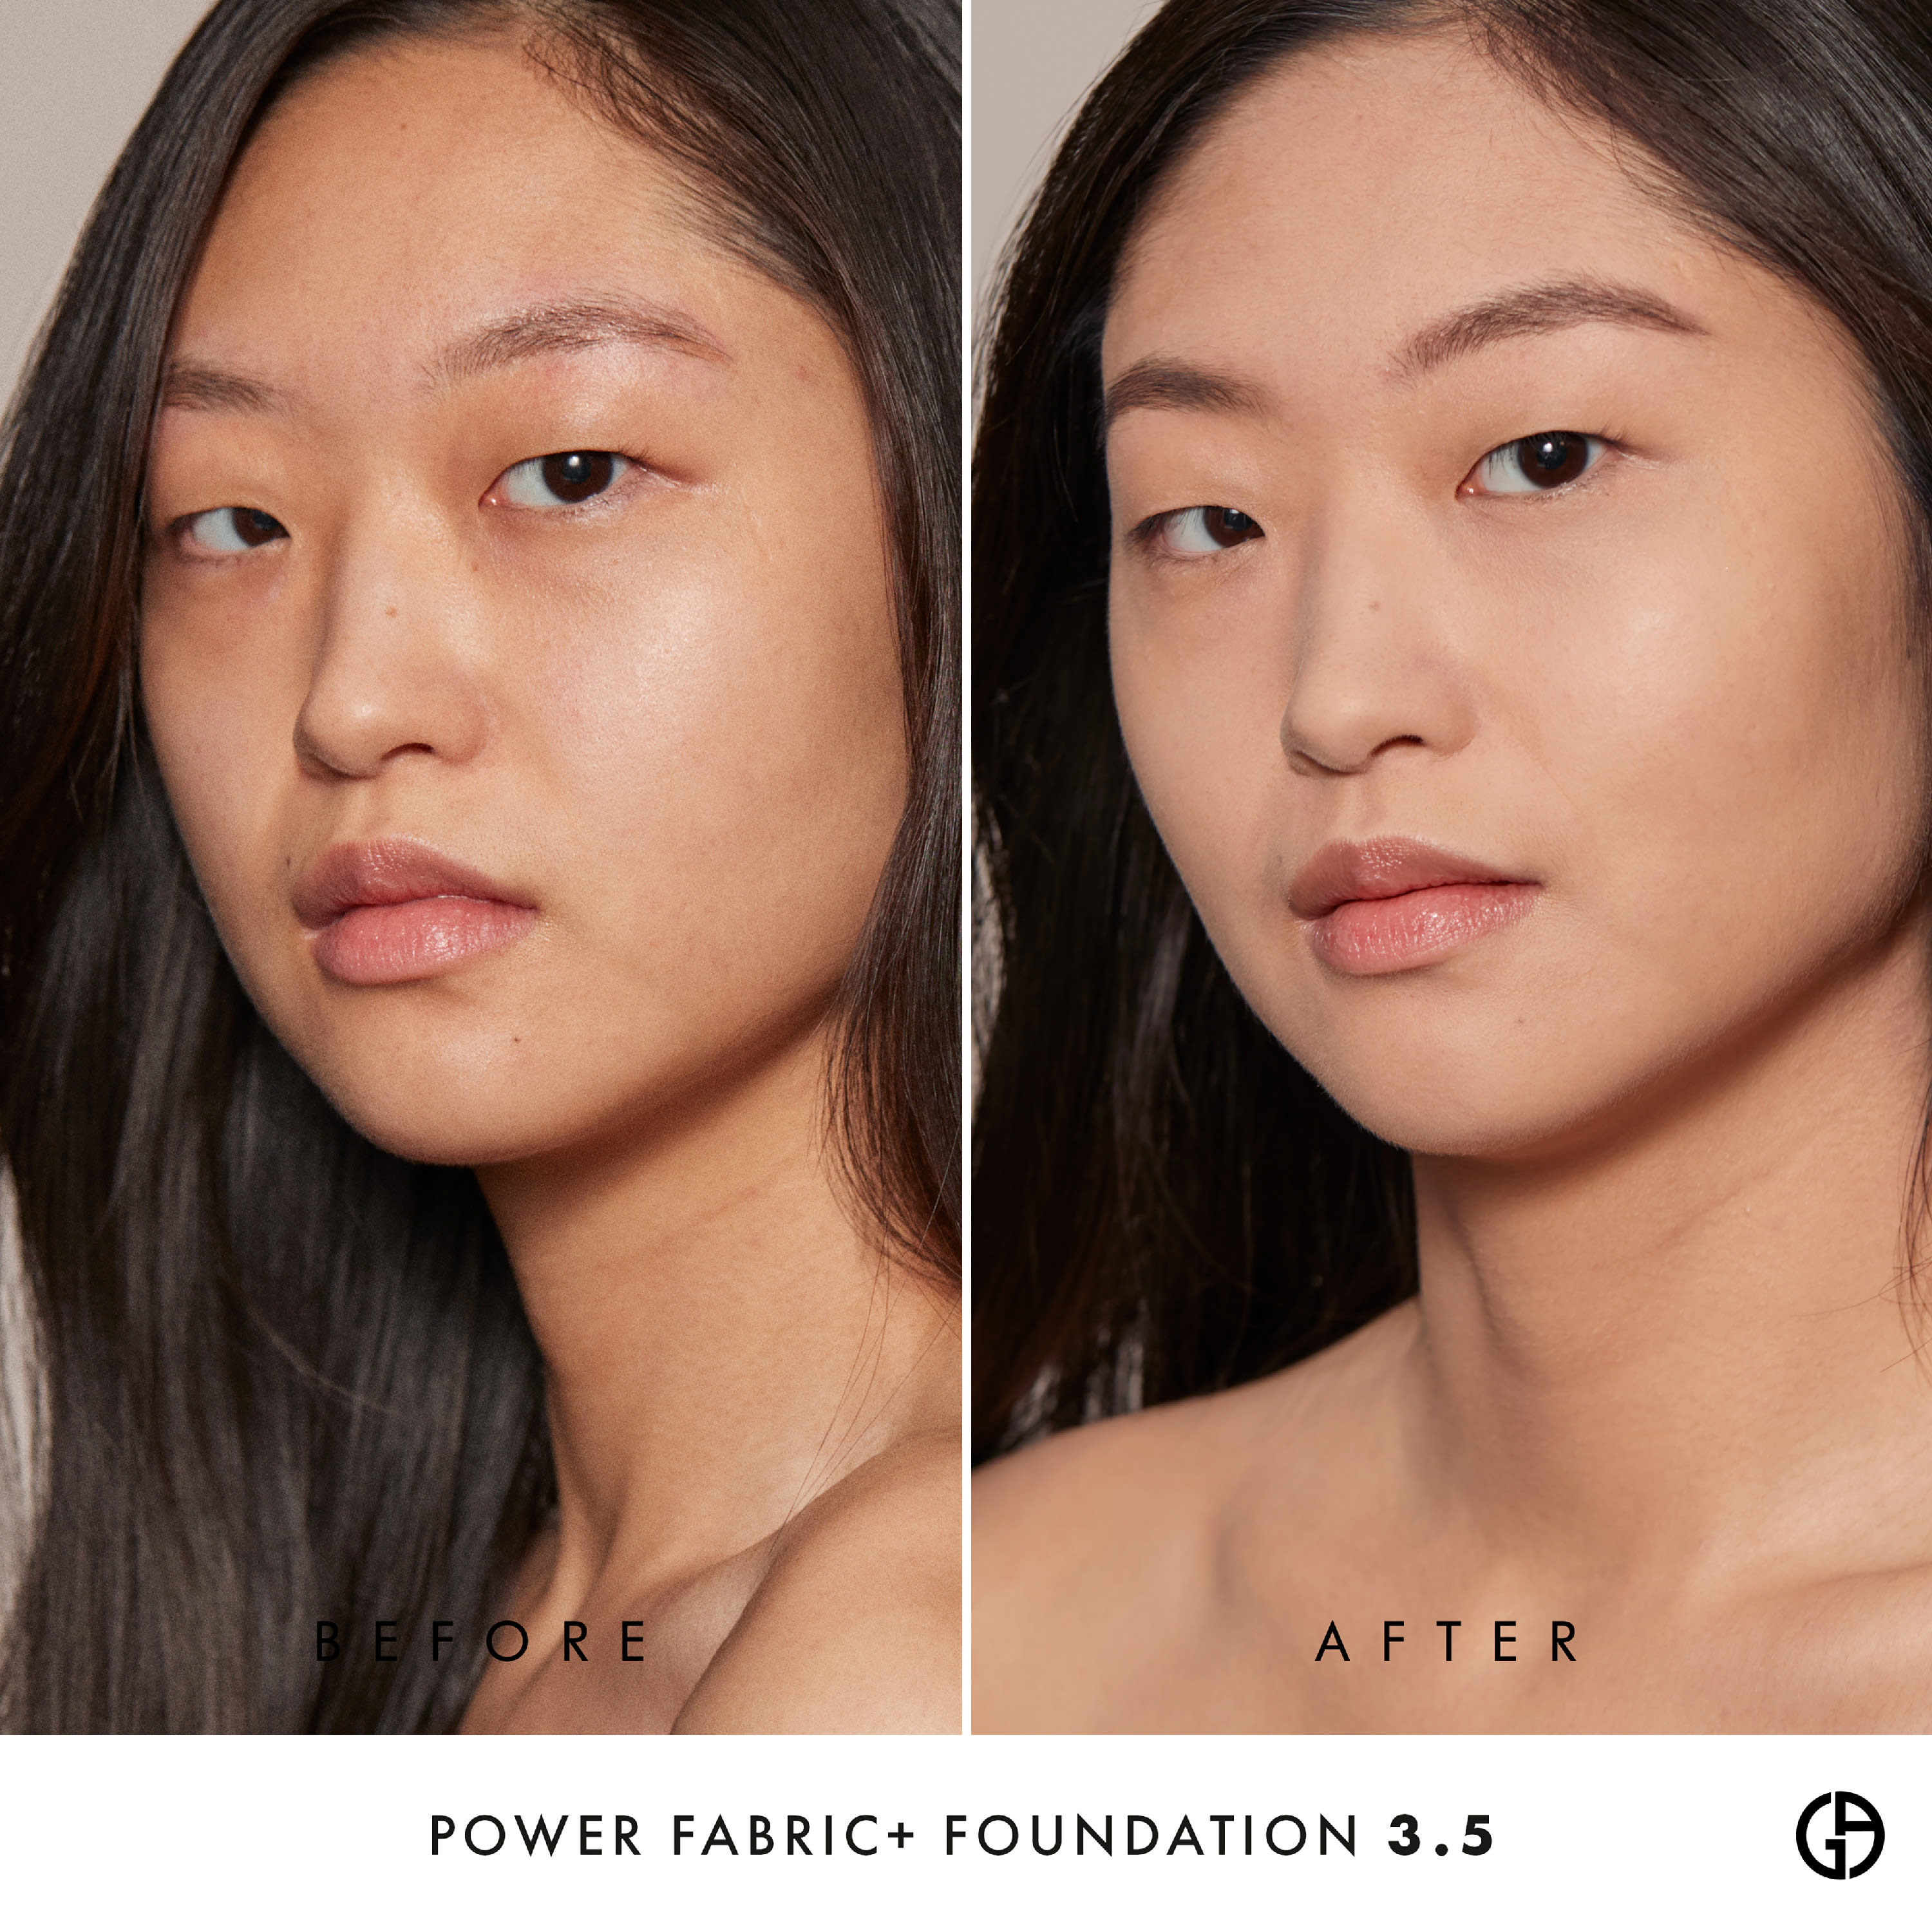 Power Fabric+ Foundation, 3.5